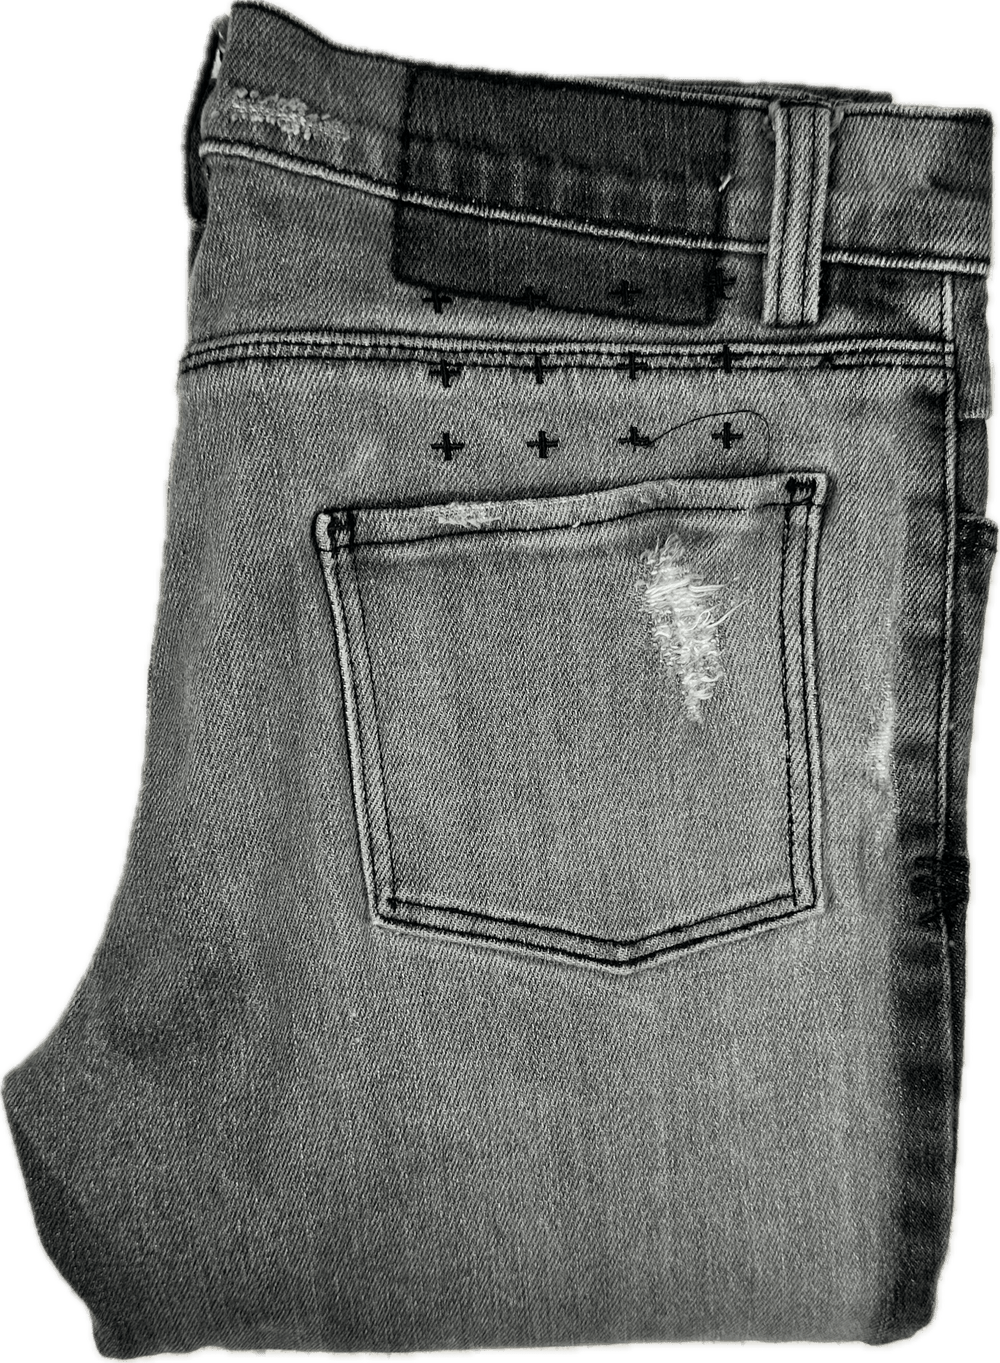 Tsubi Aussie Made 'Lean Dean' Grey Skinny Jeans - Size 10 - Jean Pool